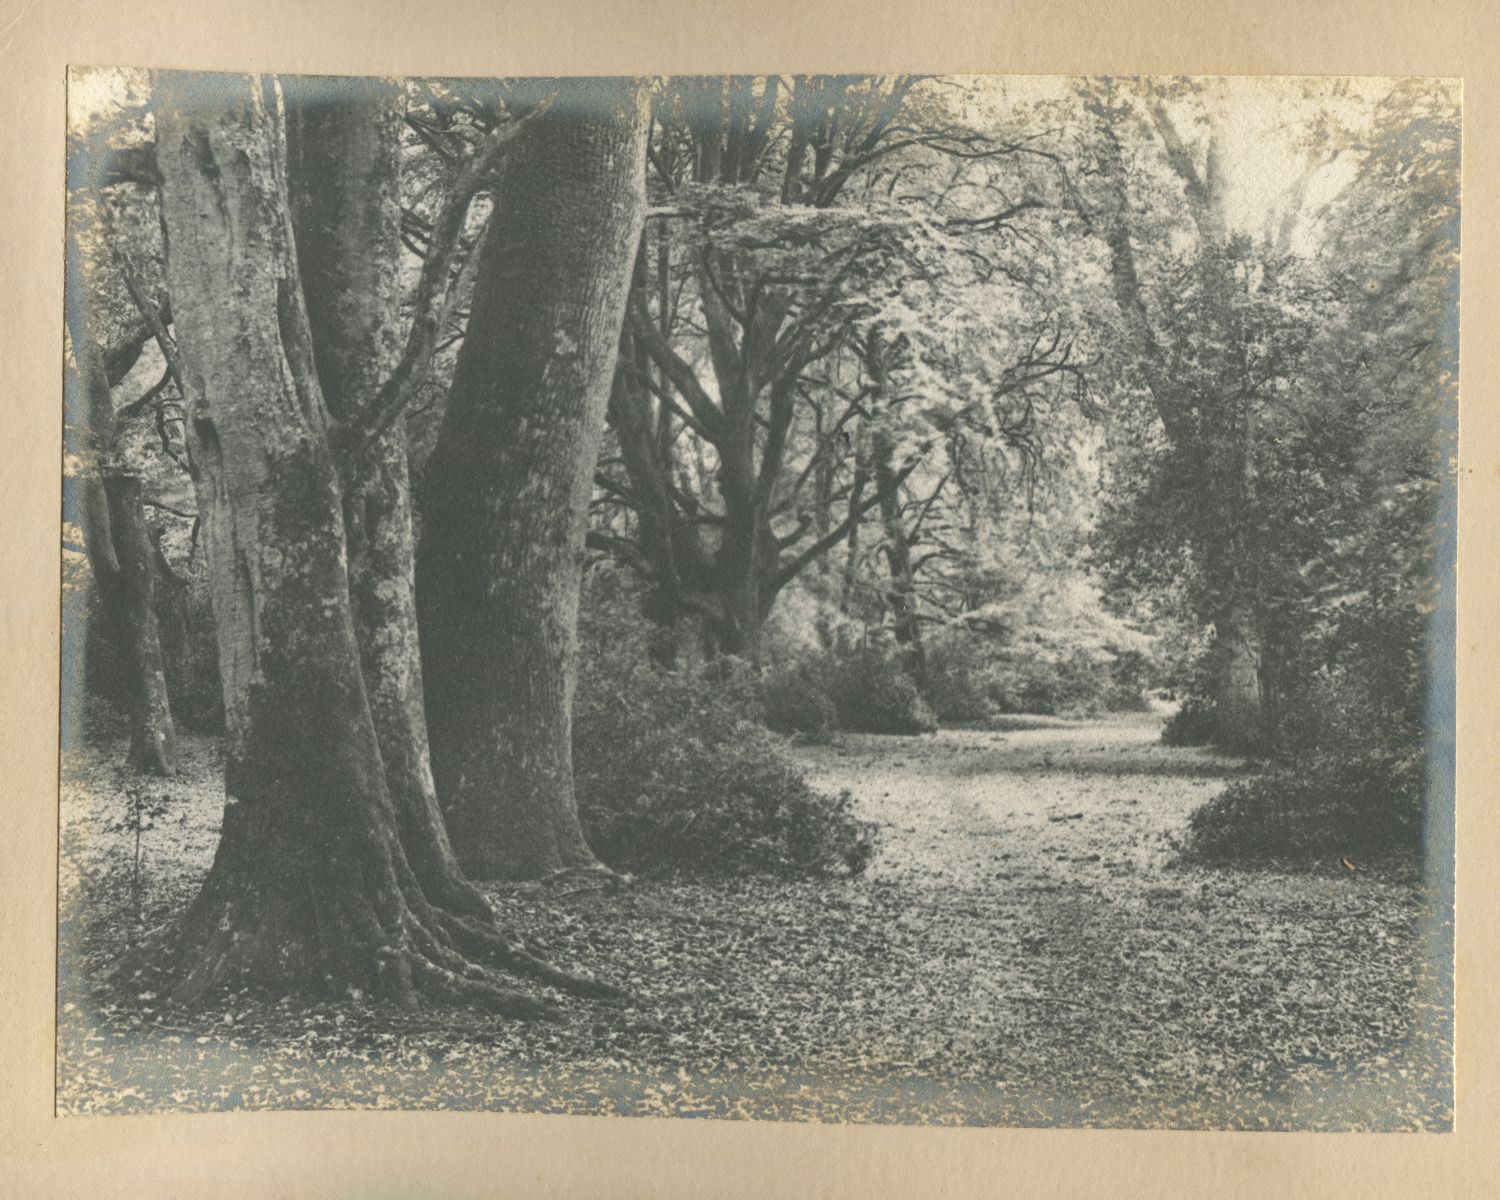 Trackway through a beech wood, Burley